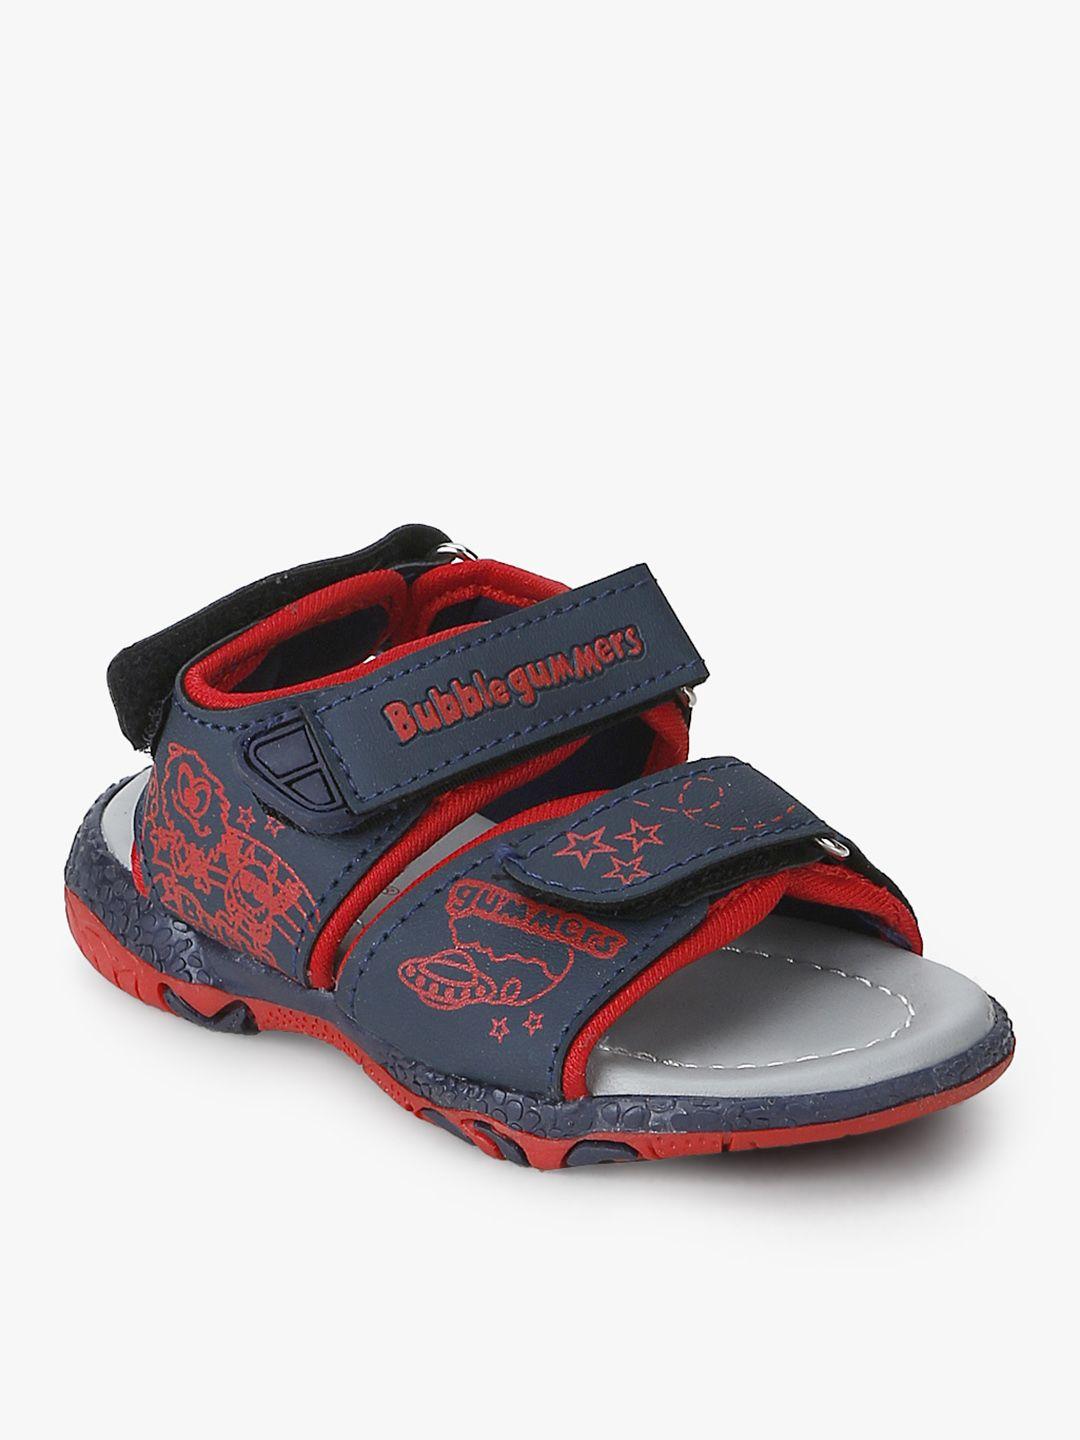 bubblegummers-boys-navy-blue-&-red-sports-sandals